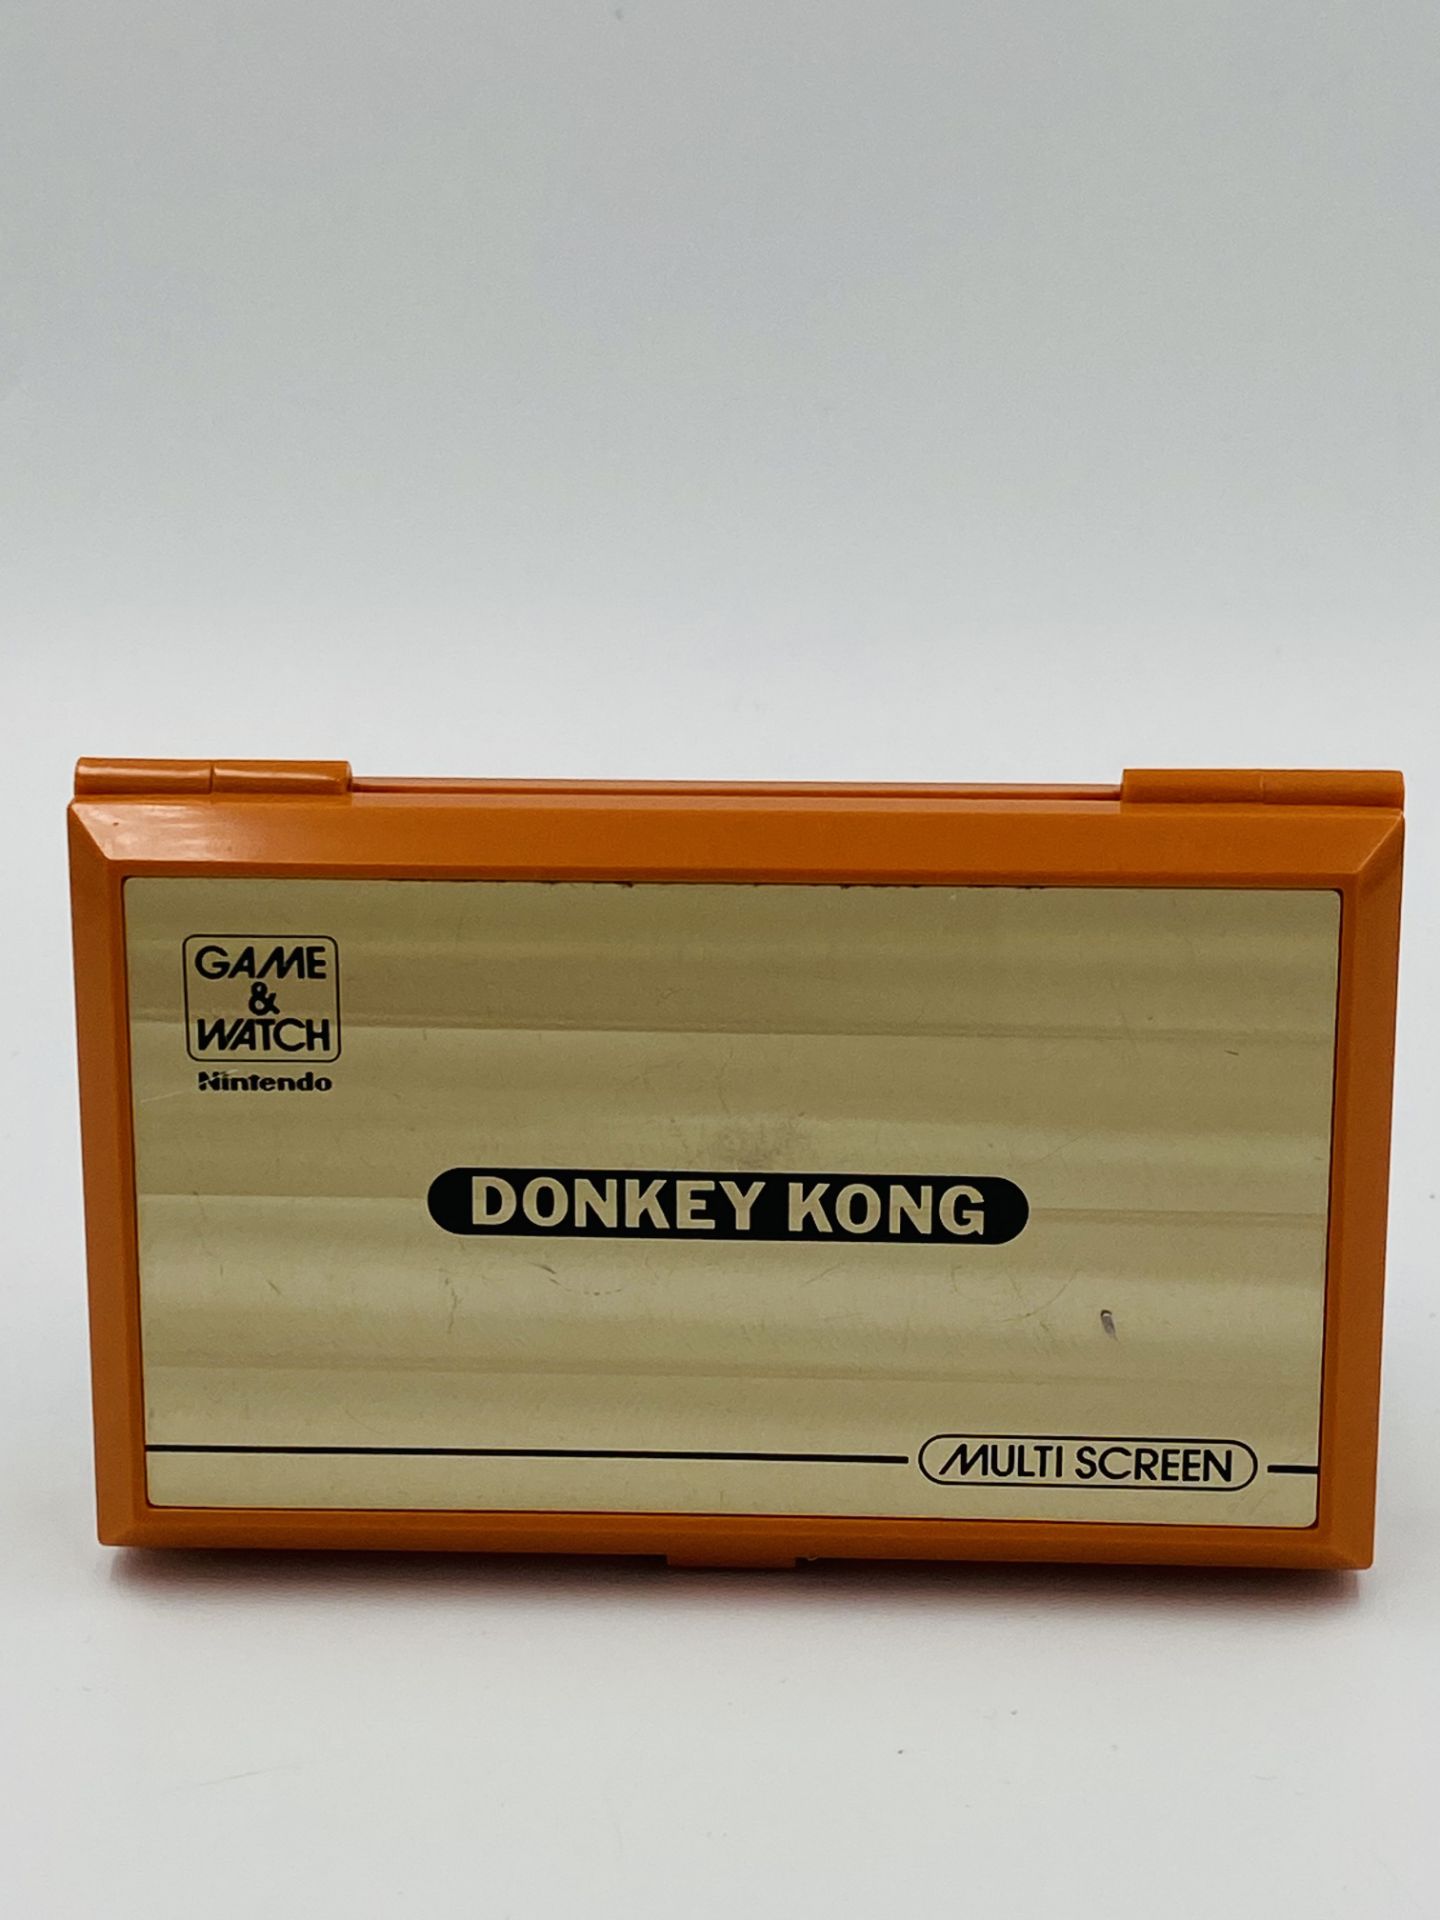 Nintendo Game & Watch Donkey Kong, model DK-52